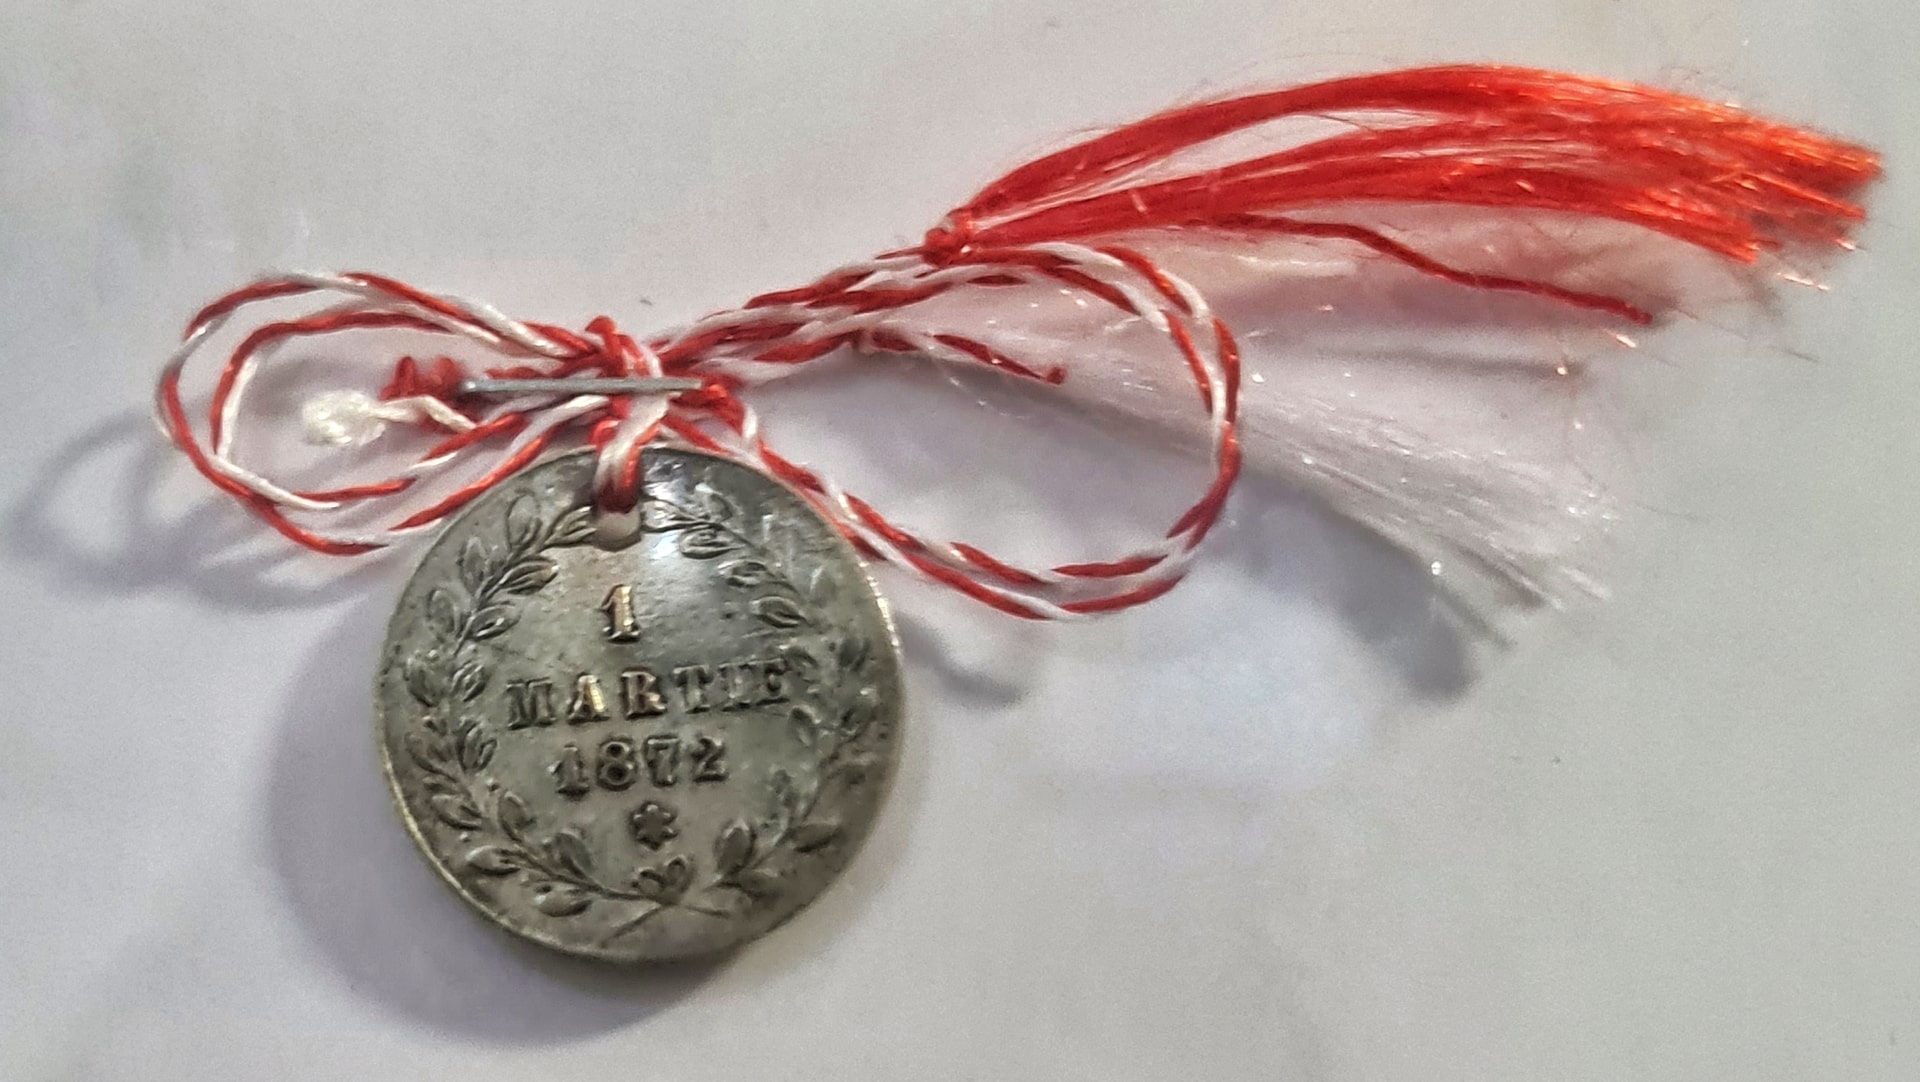 martisorul-amuleta-si-simbol-cel-mai-vechi-martisor-datat-in-romania-1872